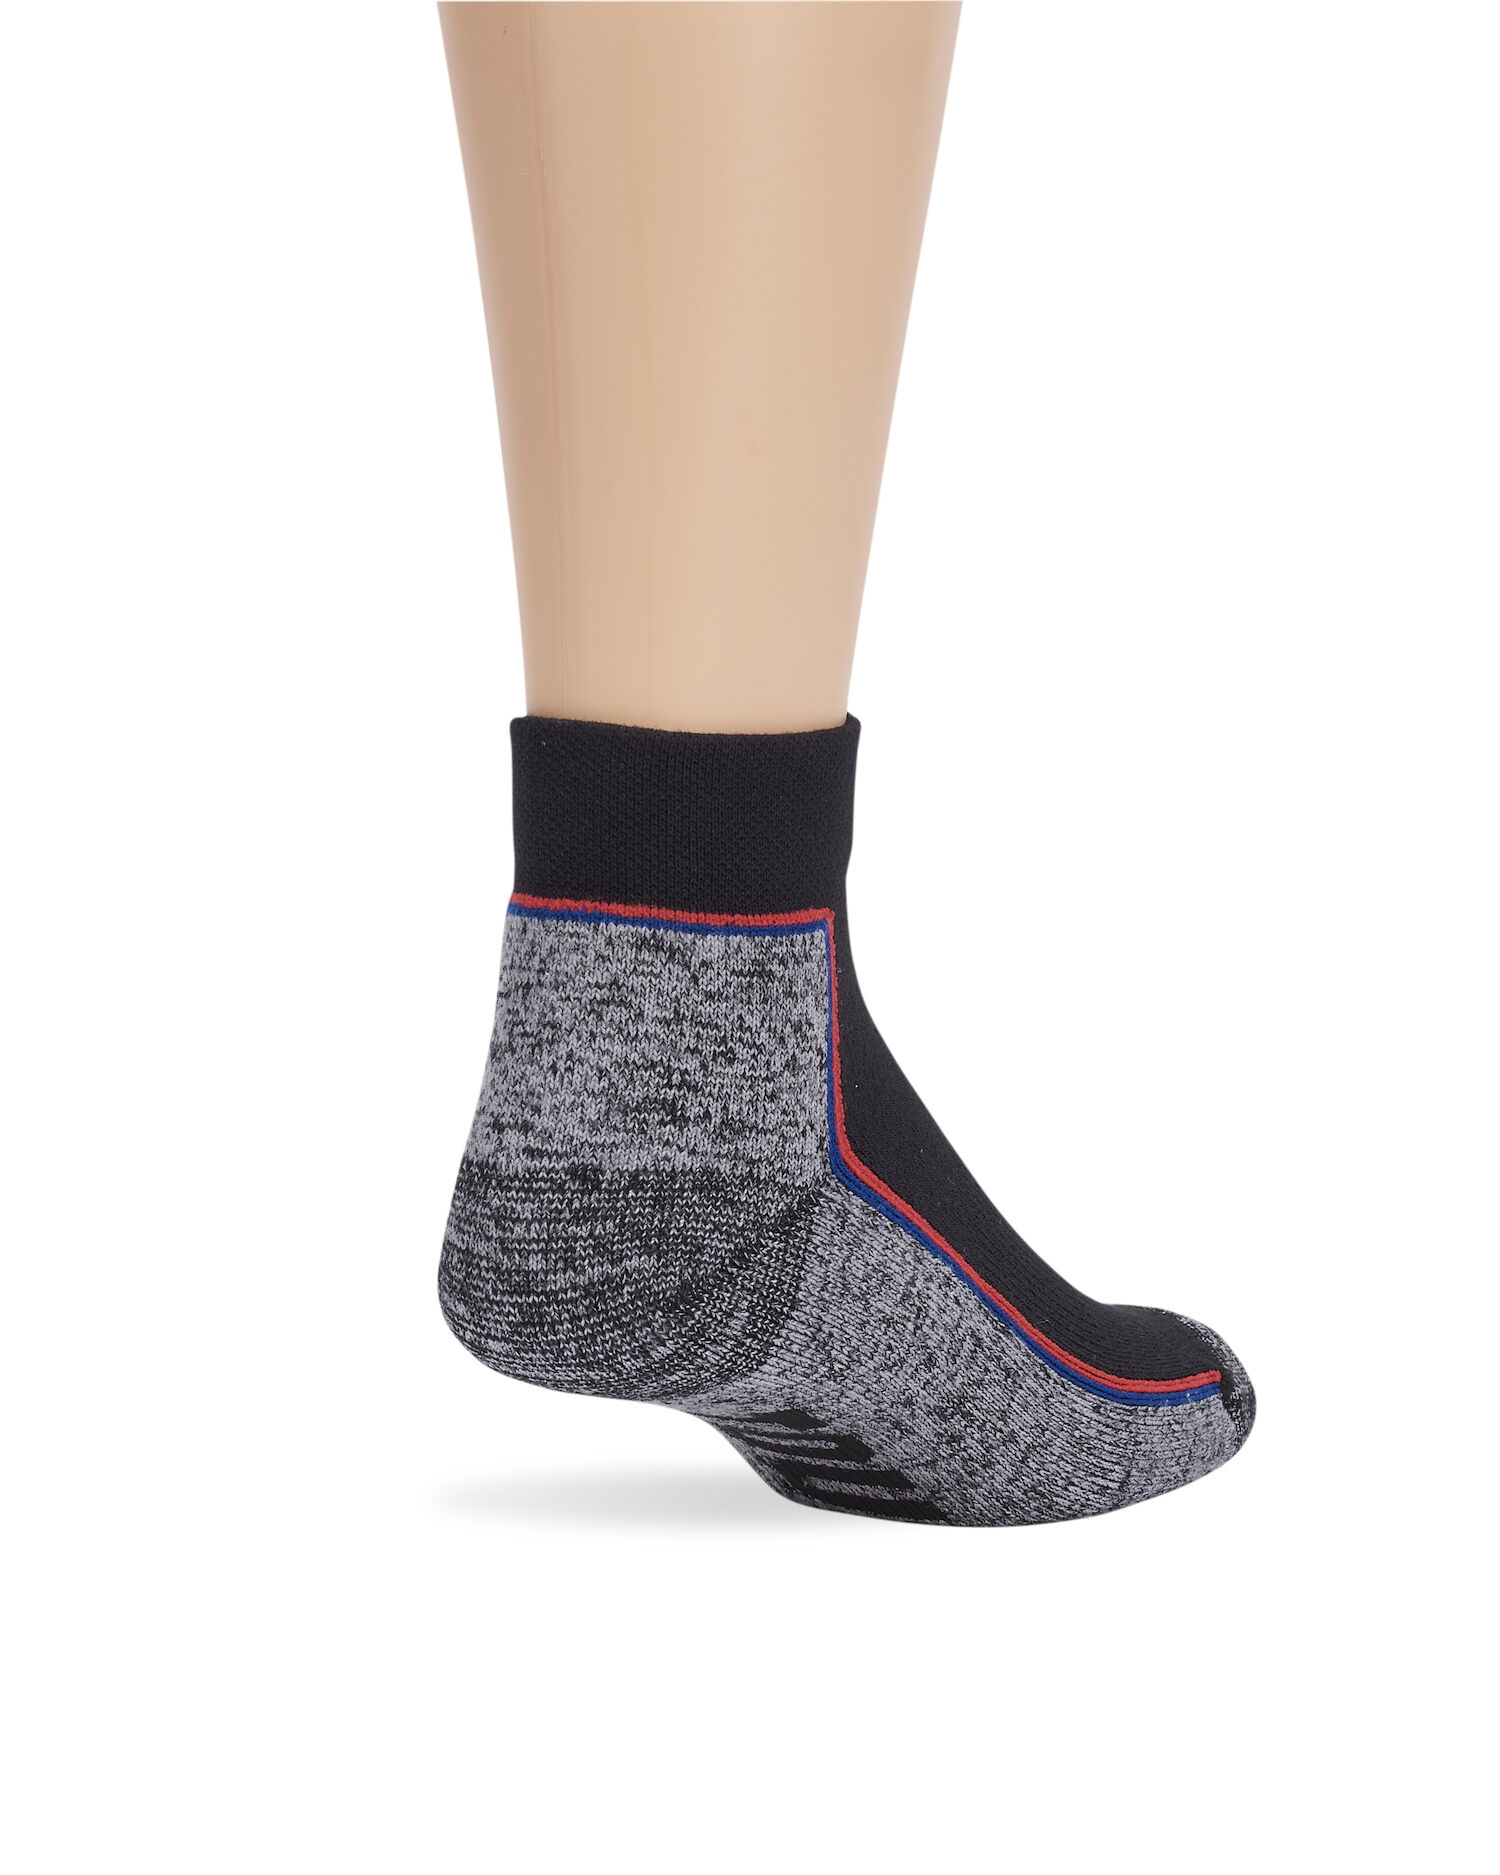 OTS Extended-Cushioned-Ankle-Sock-black_b-3.jpg